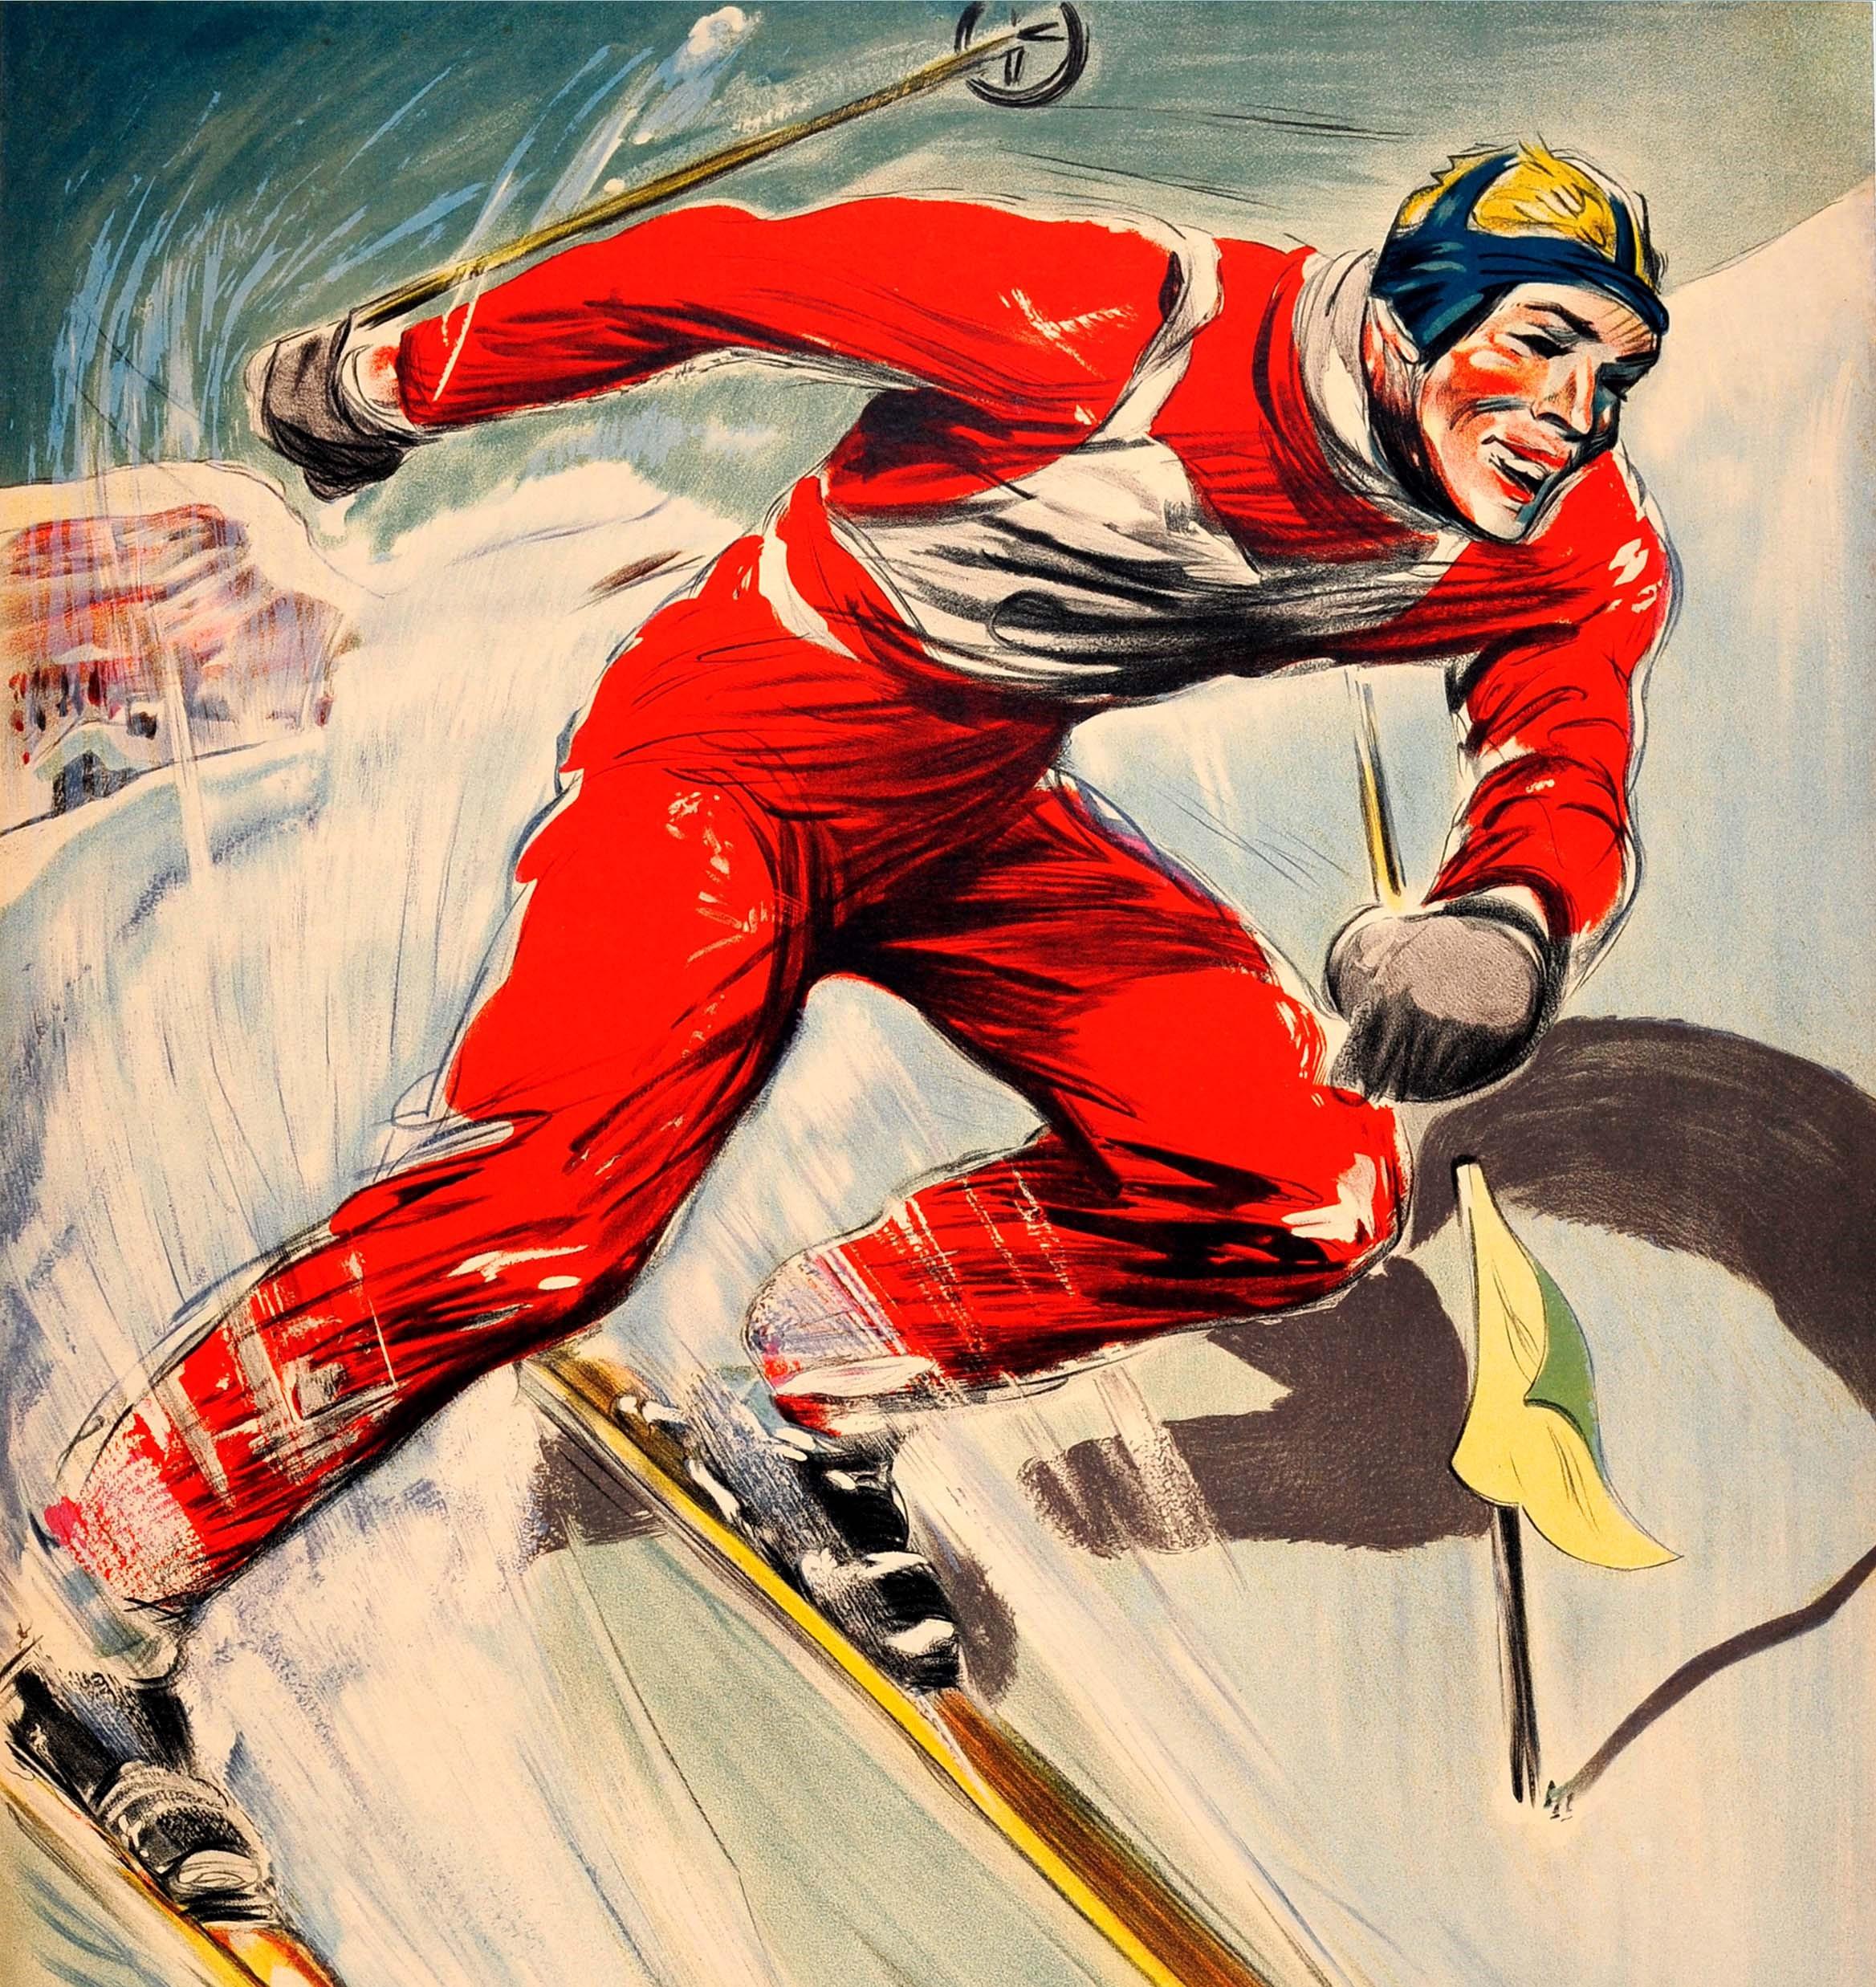 Original Vintage 1930s Skiing Poster by Paul Ordner for Mont Revard France PLM 1